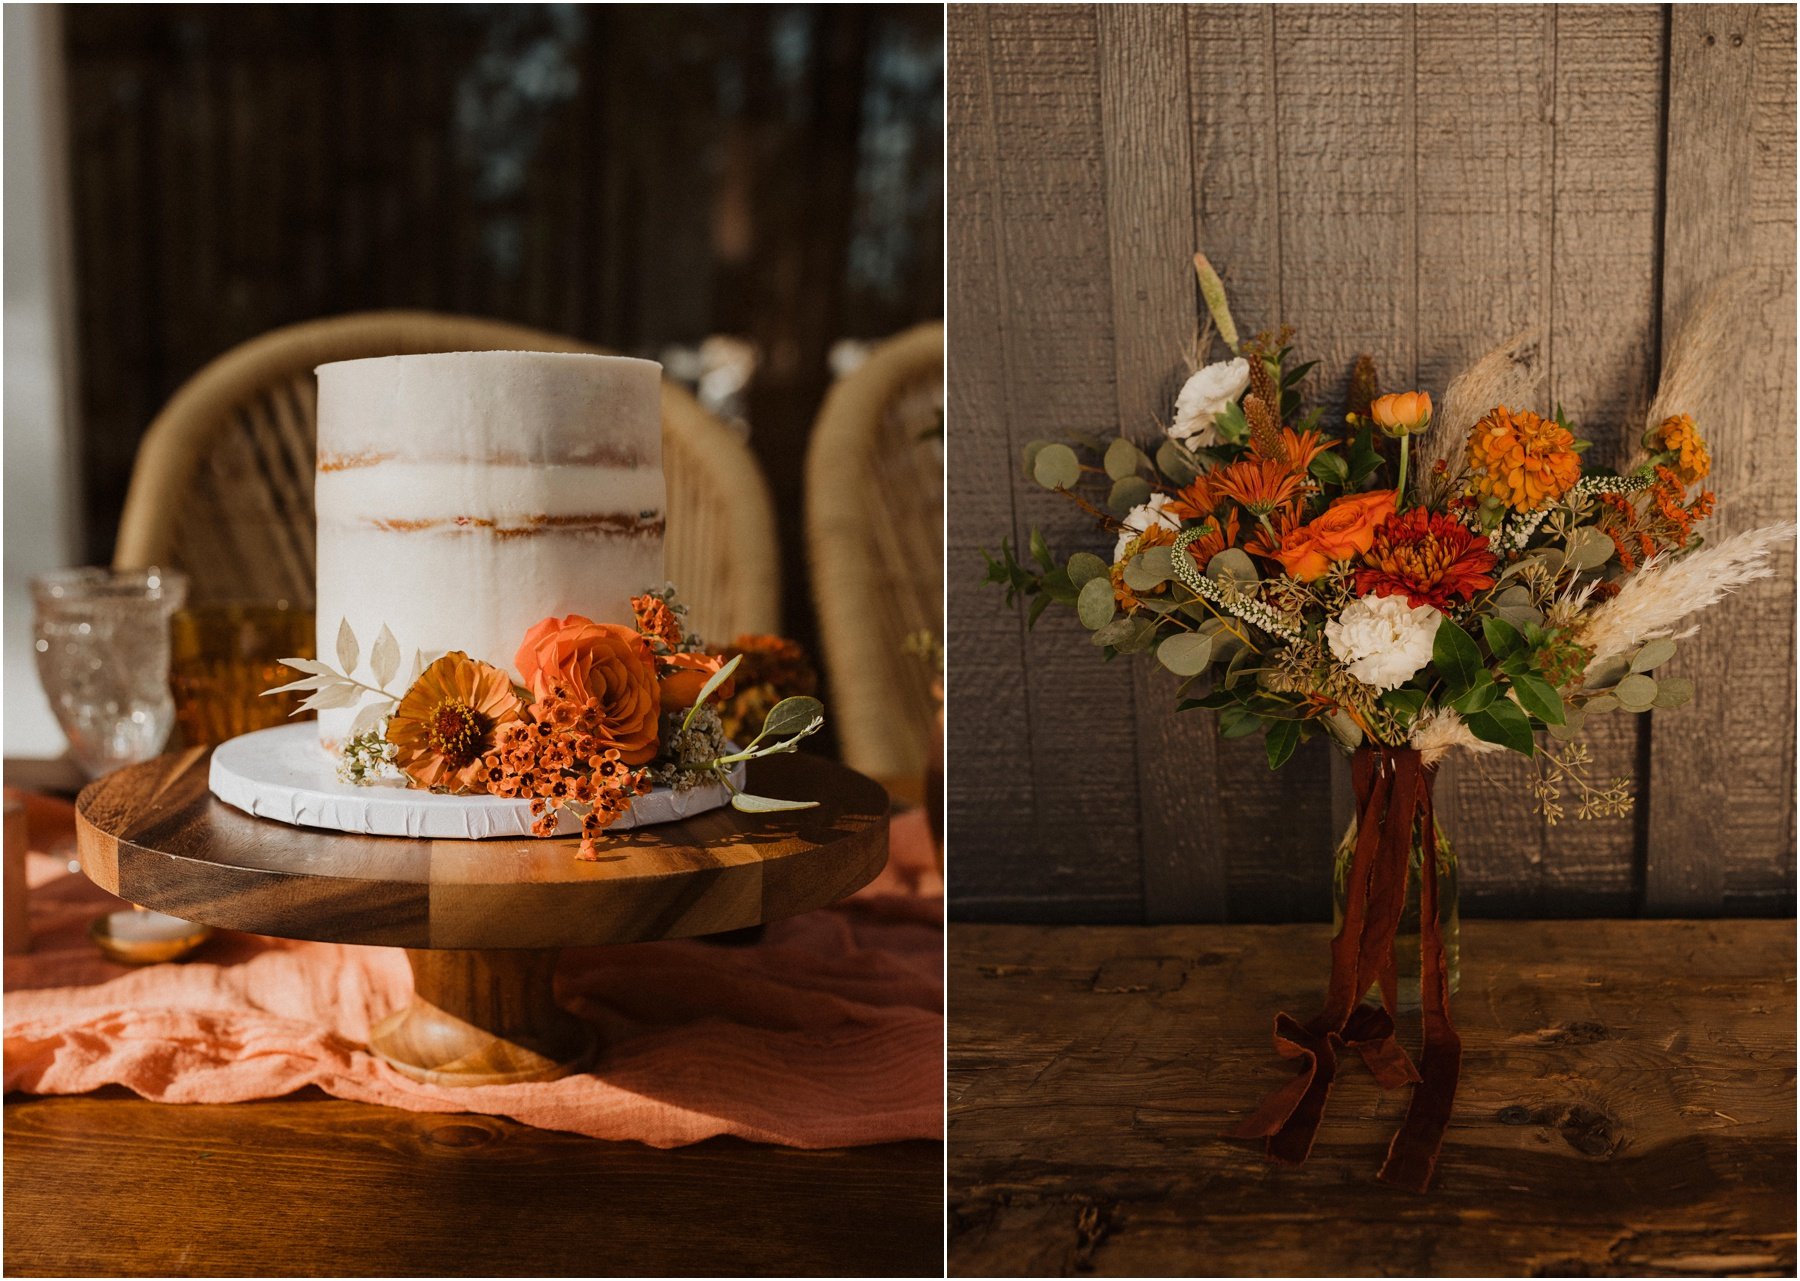 one tier wedding cake with white frosting and orange flowers, next to orange boho bridal bouquet